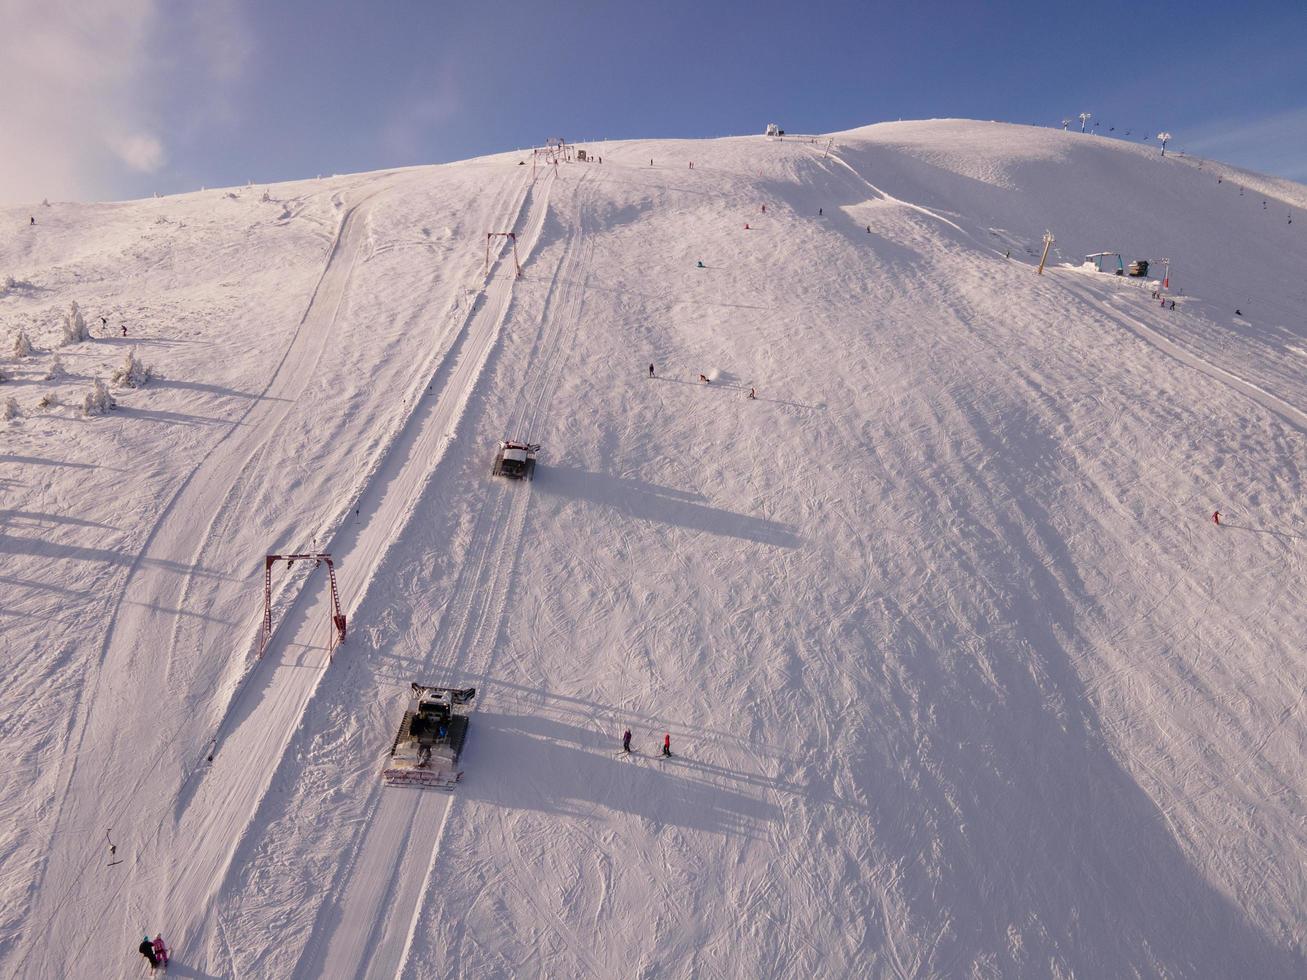 snowcat yoke ski lift vista superior da encosta coberta de neve foto